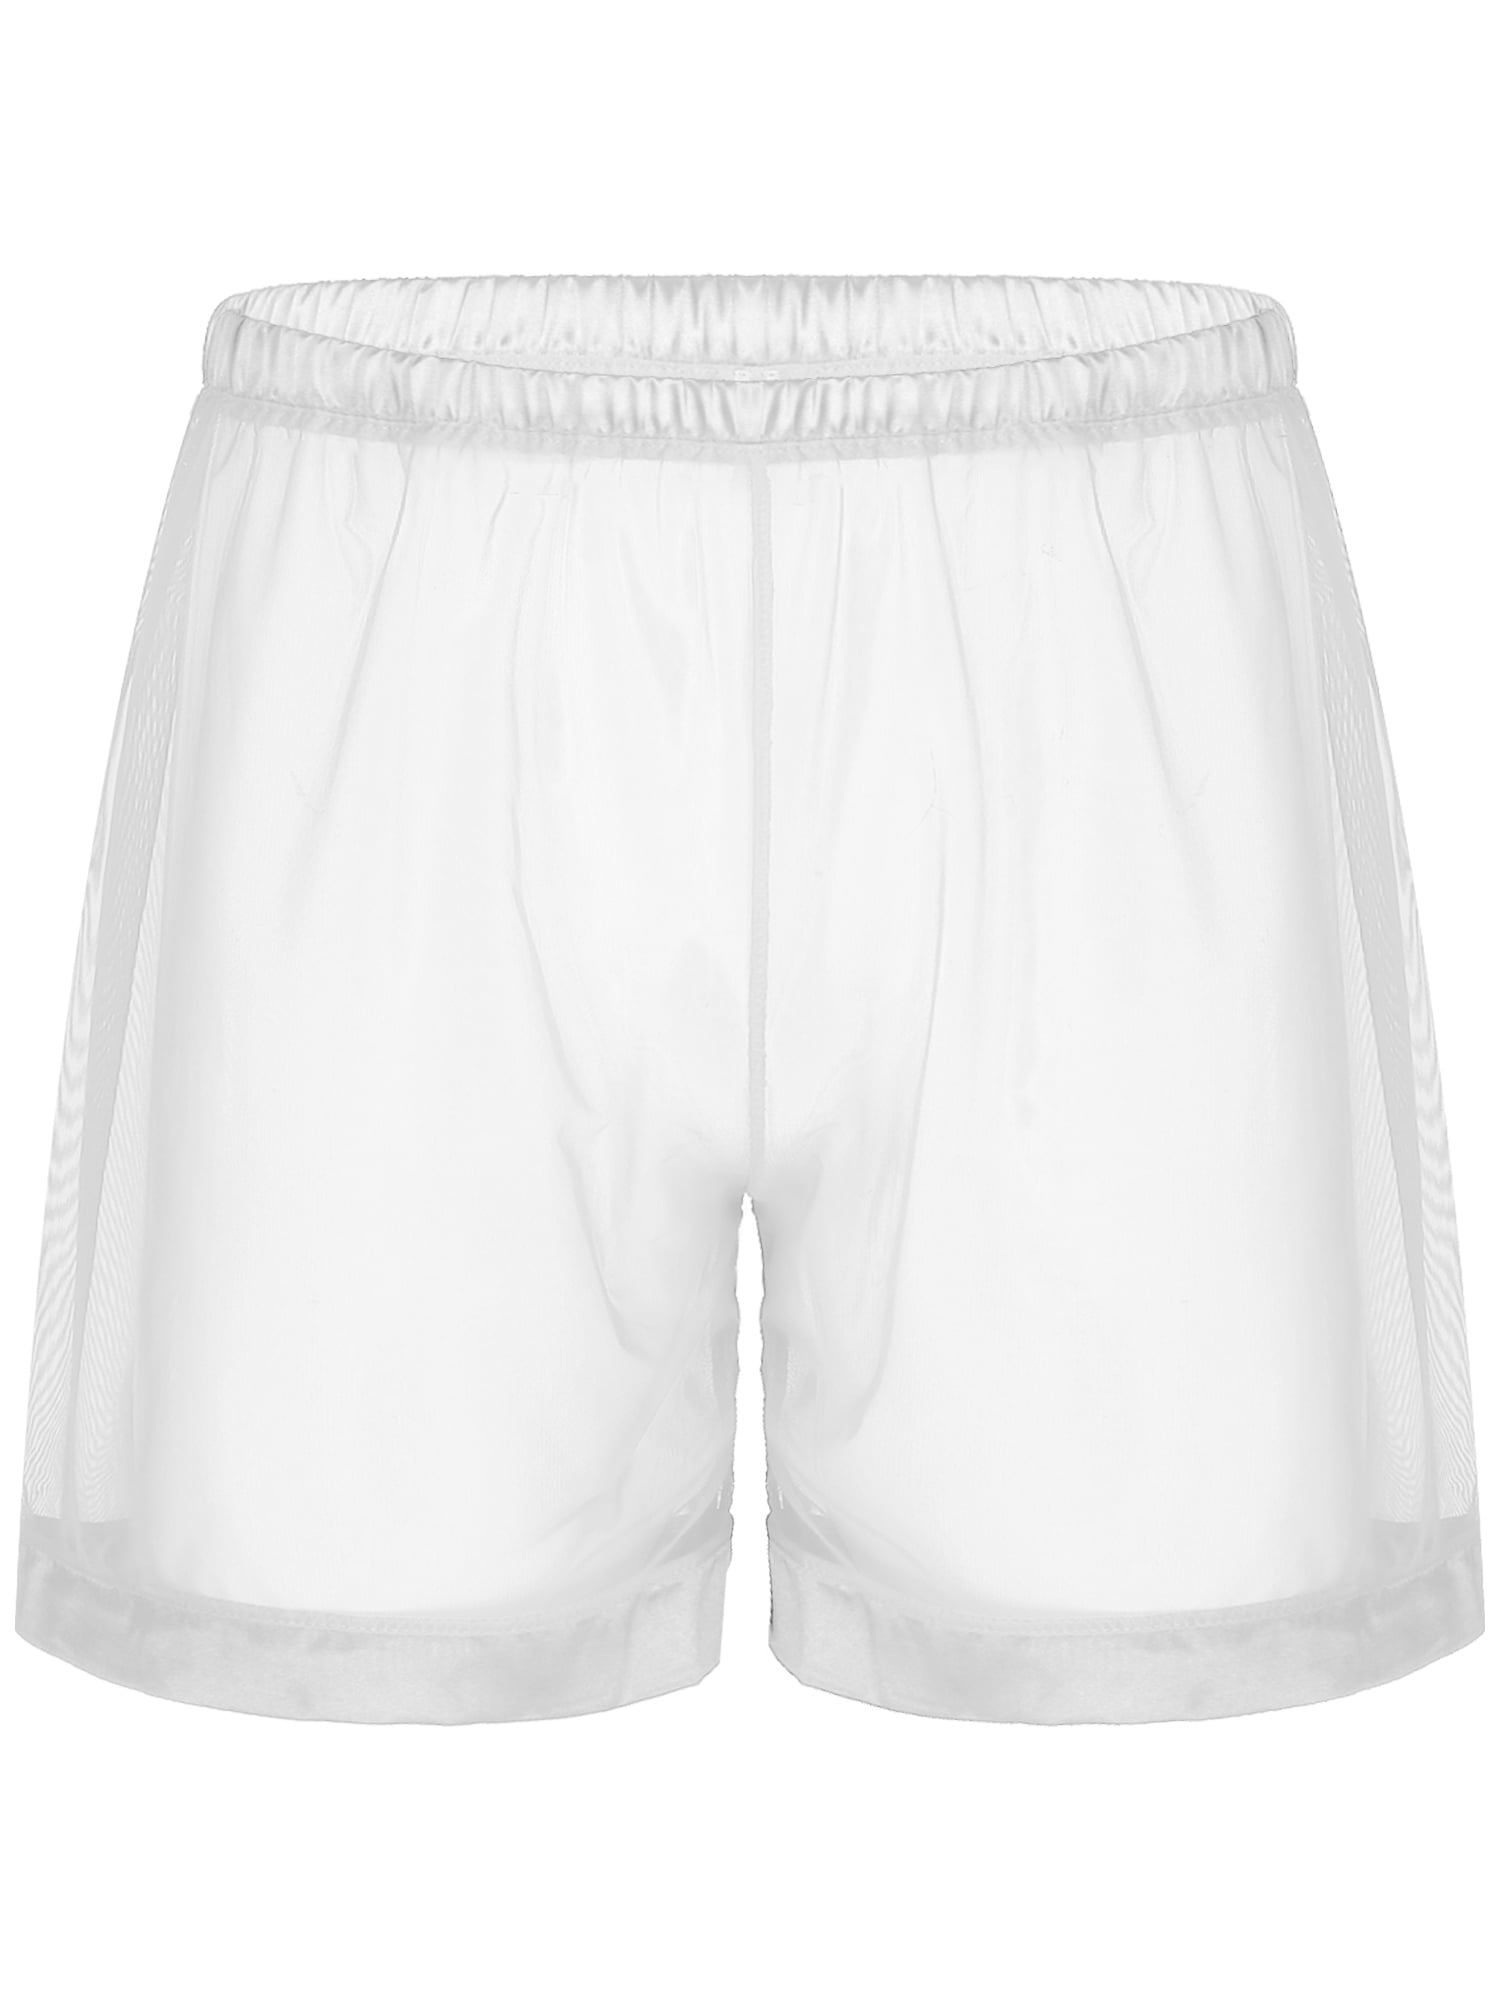 iEFiEL Mens Mesh Loose Boxer Shorts See-through Beach Board Shorts ...